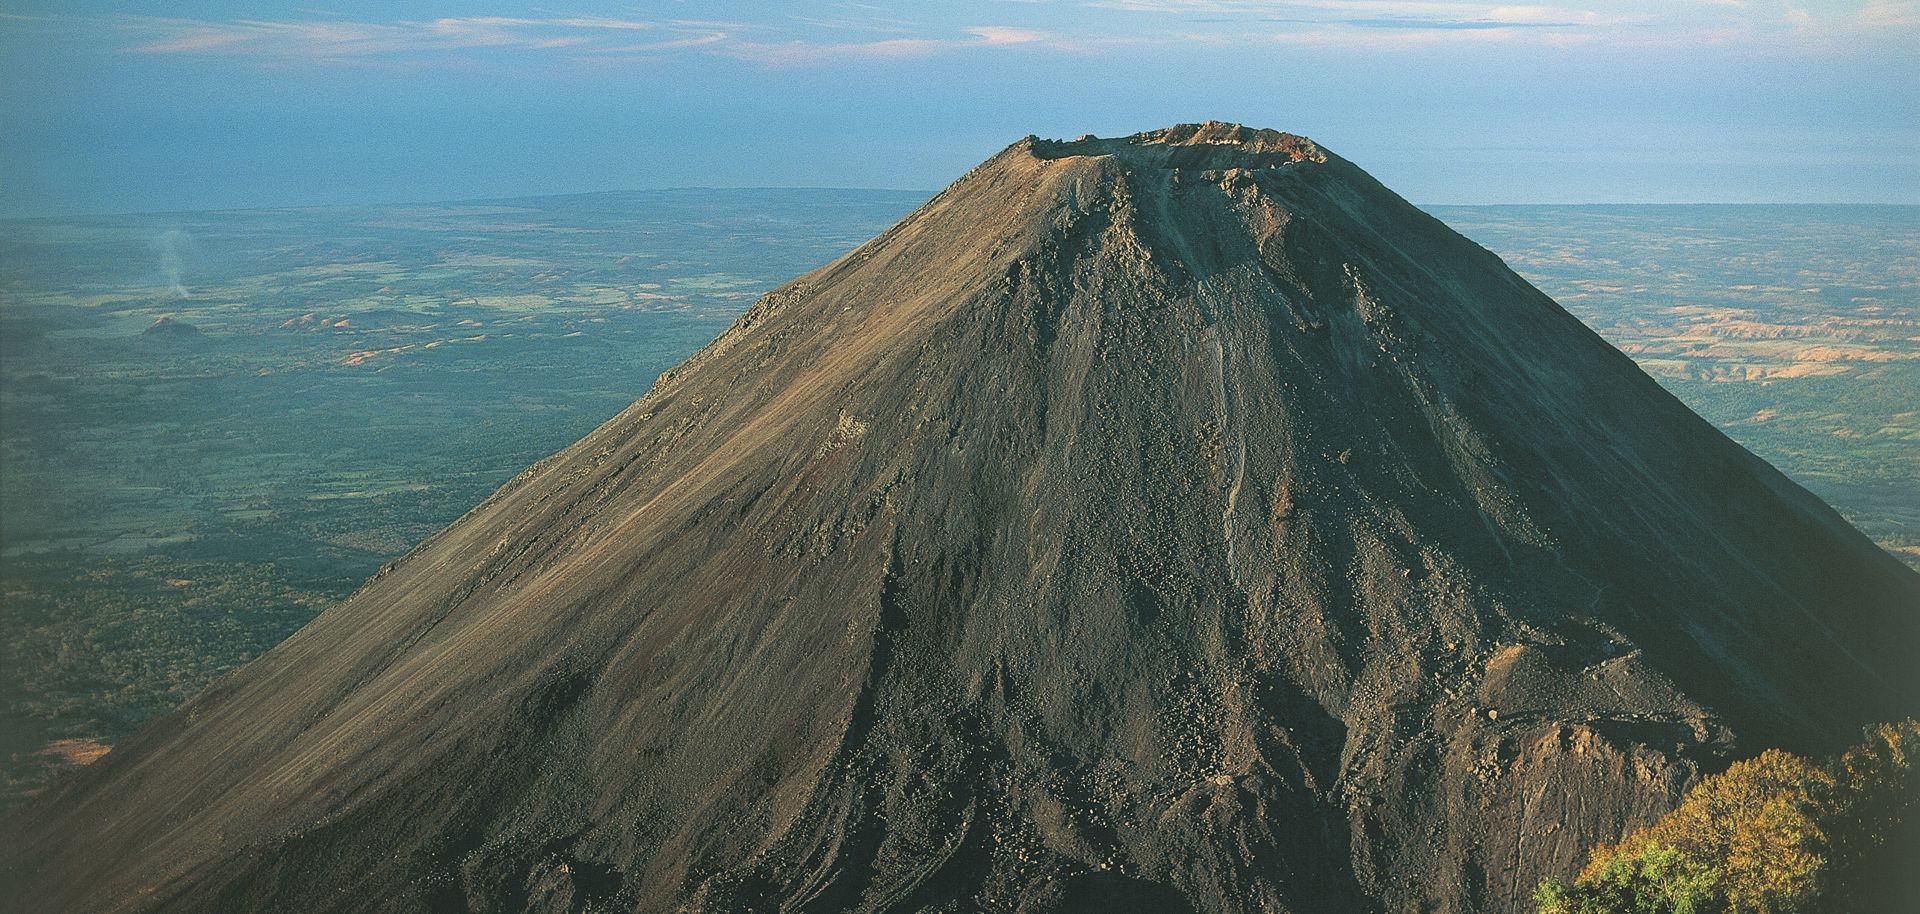 Volcano on a landscape.